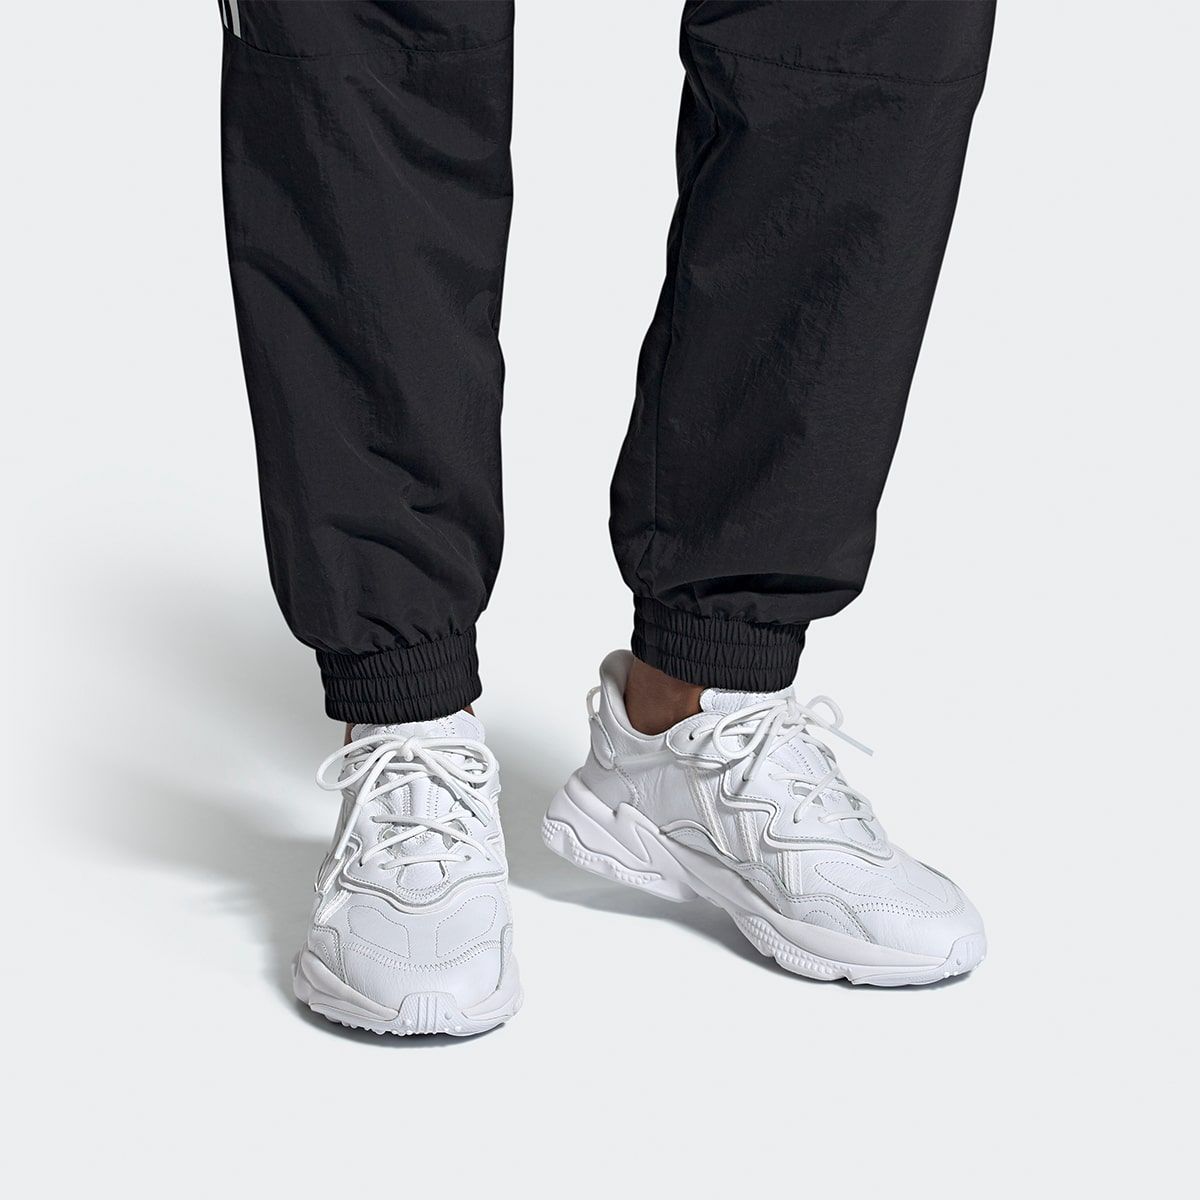 adidas originals ozweego sneakers in triple white